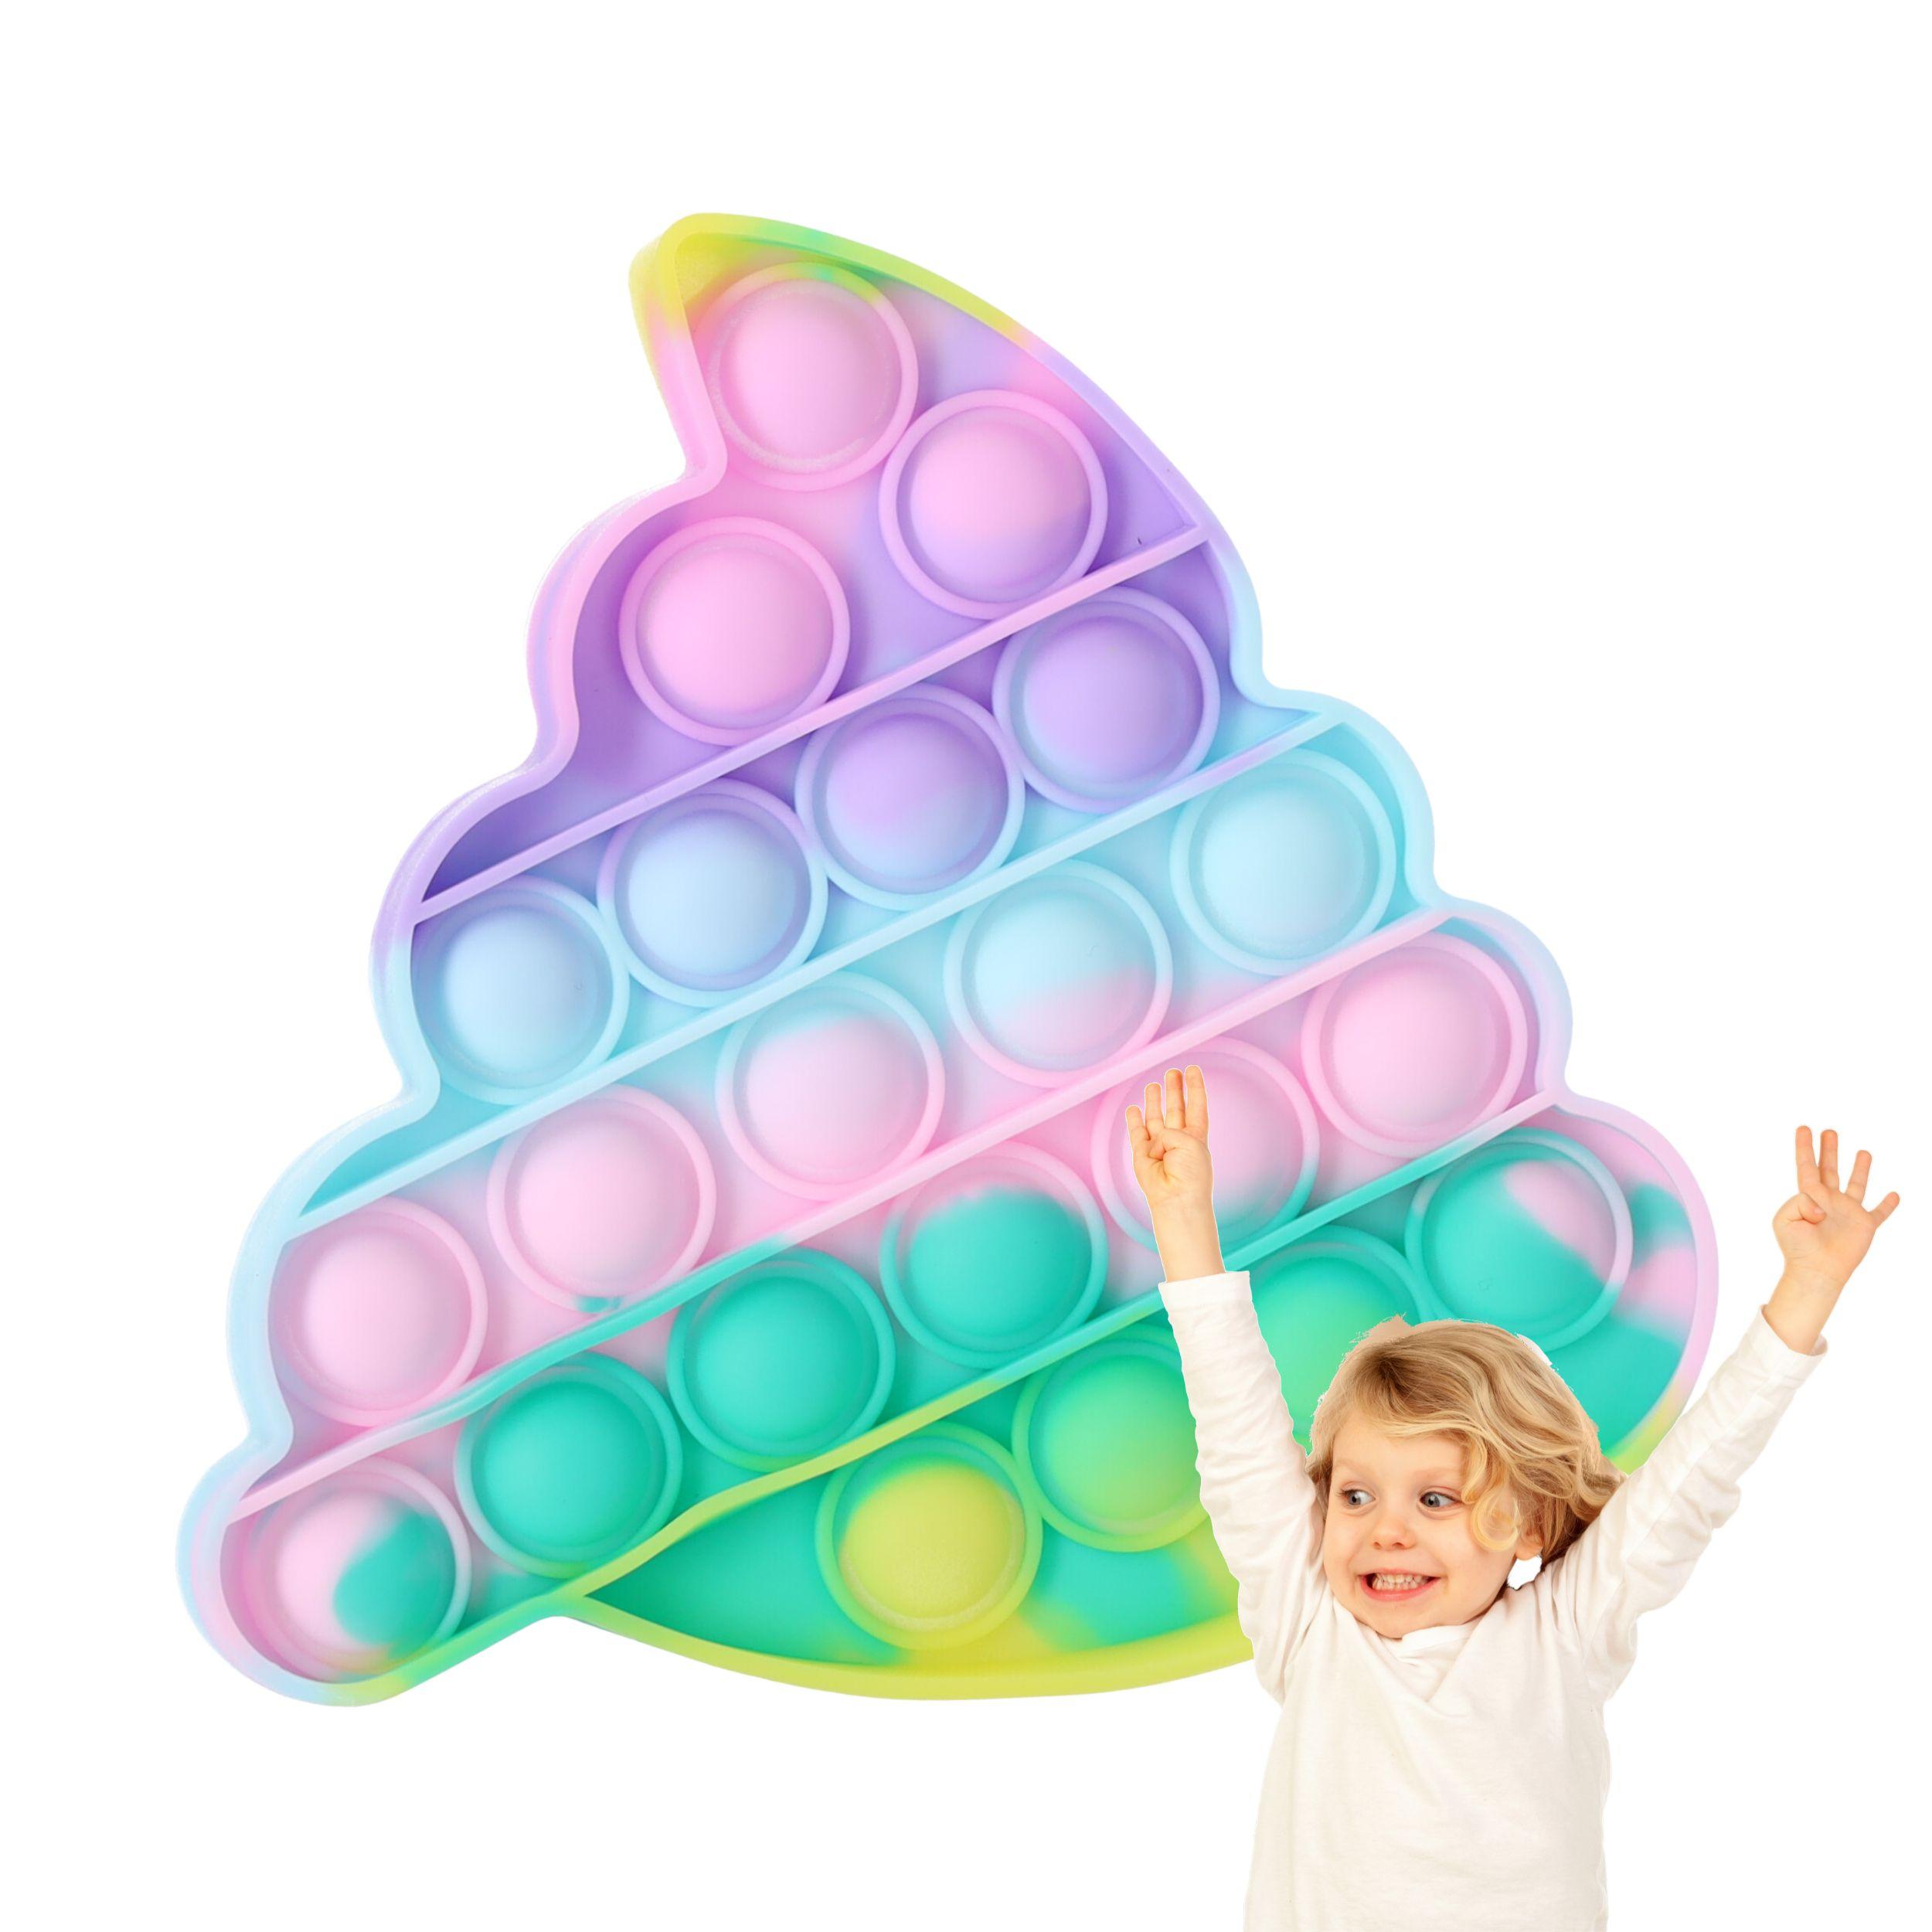 Anti-stress sensory toy in the shape of ice cream